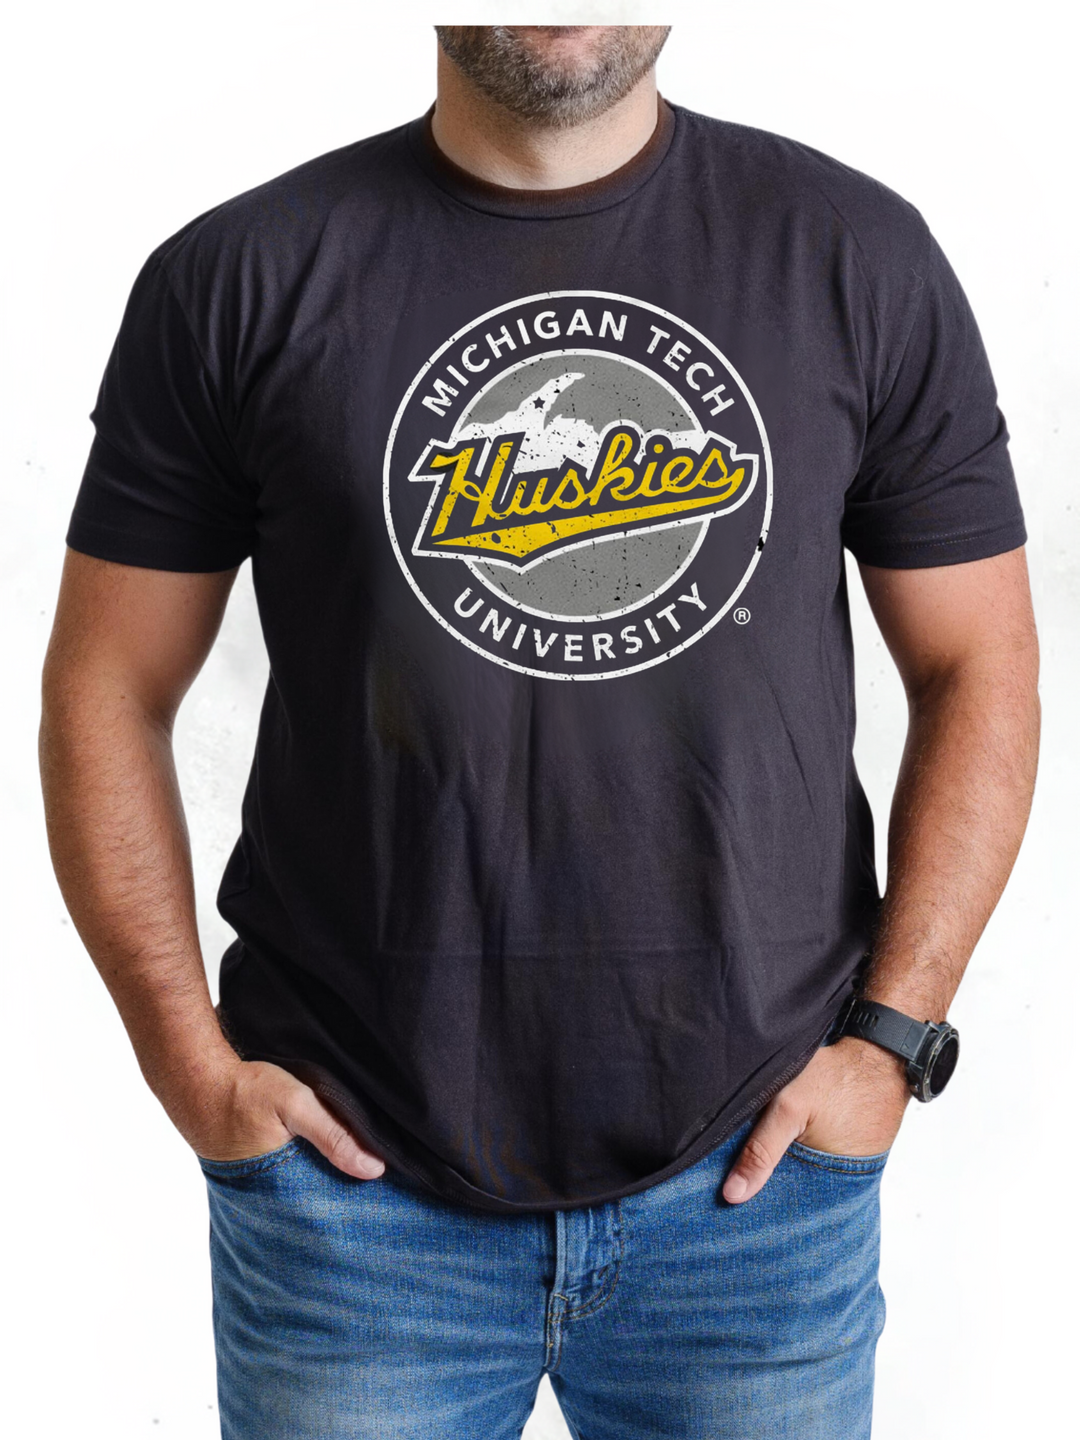 Michigan Tech Huskies Circular UP Shield Unisex T-shirt on Model